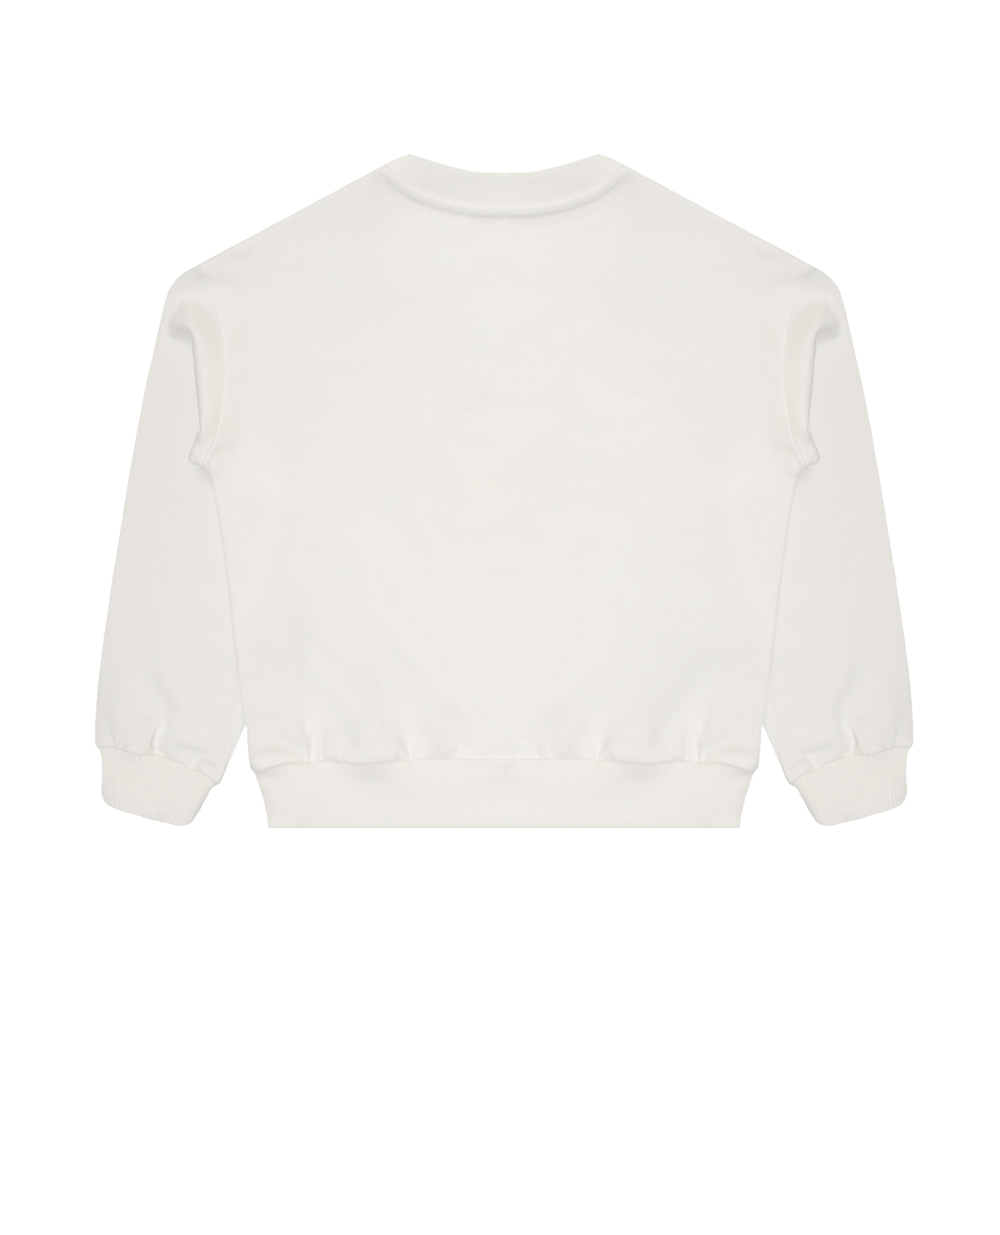 Свитшот Dolce&Gabbana Kids L5JW3B-G7XMP-S, белый цвет • Купить в интернет-магазине Kameron